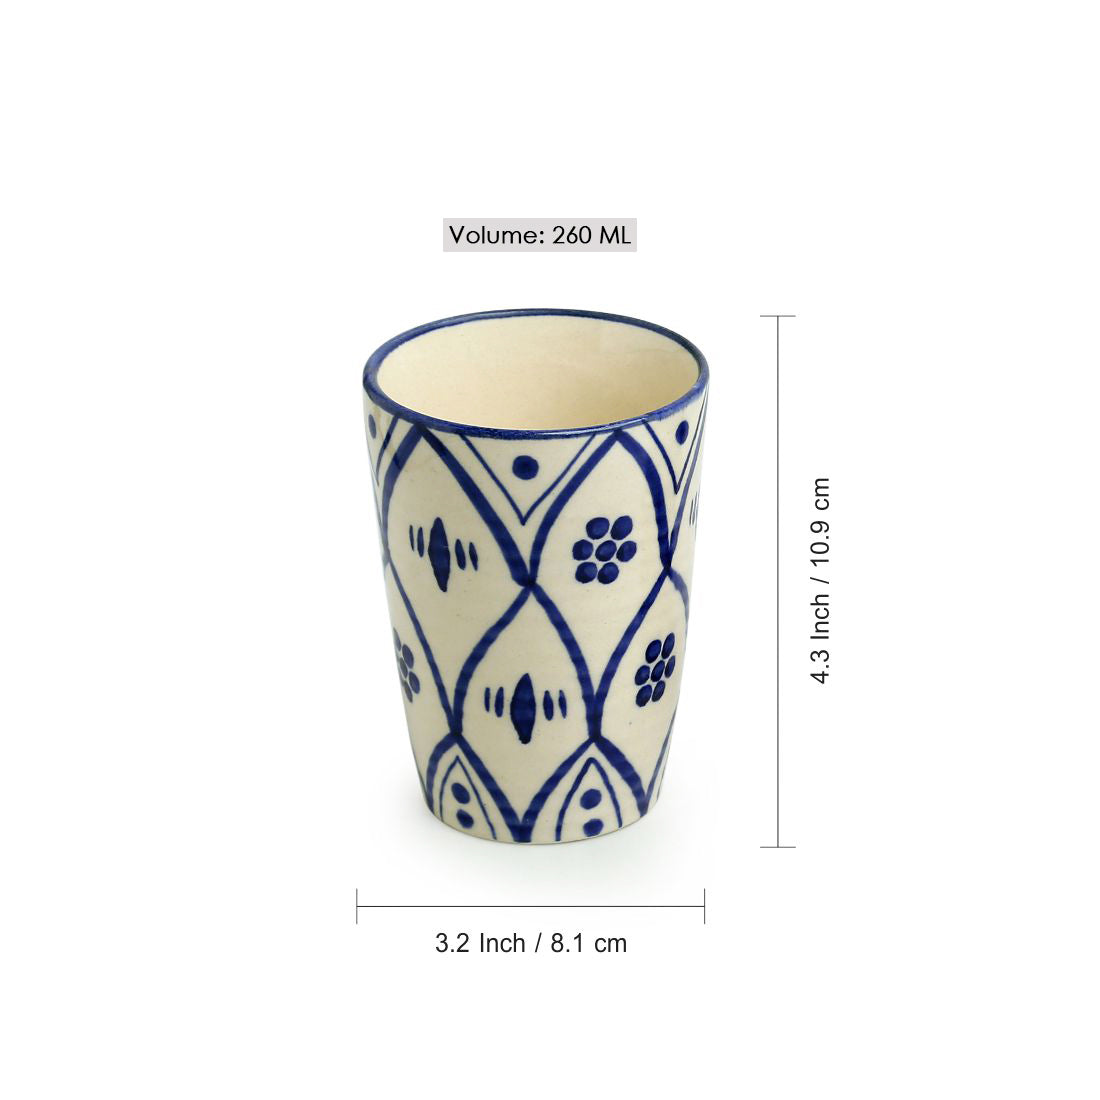 'Moroccan Floral' Handpainted Studio Pottery Ceramic Bathroom Accessory (Set of 3)